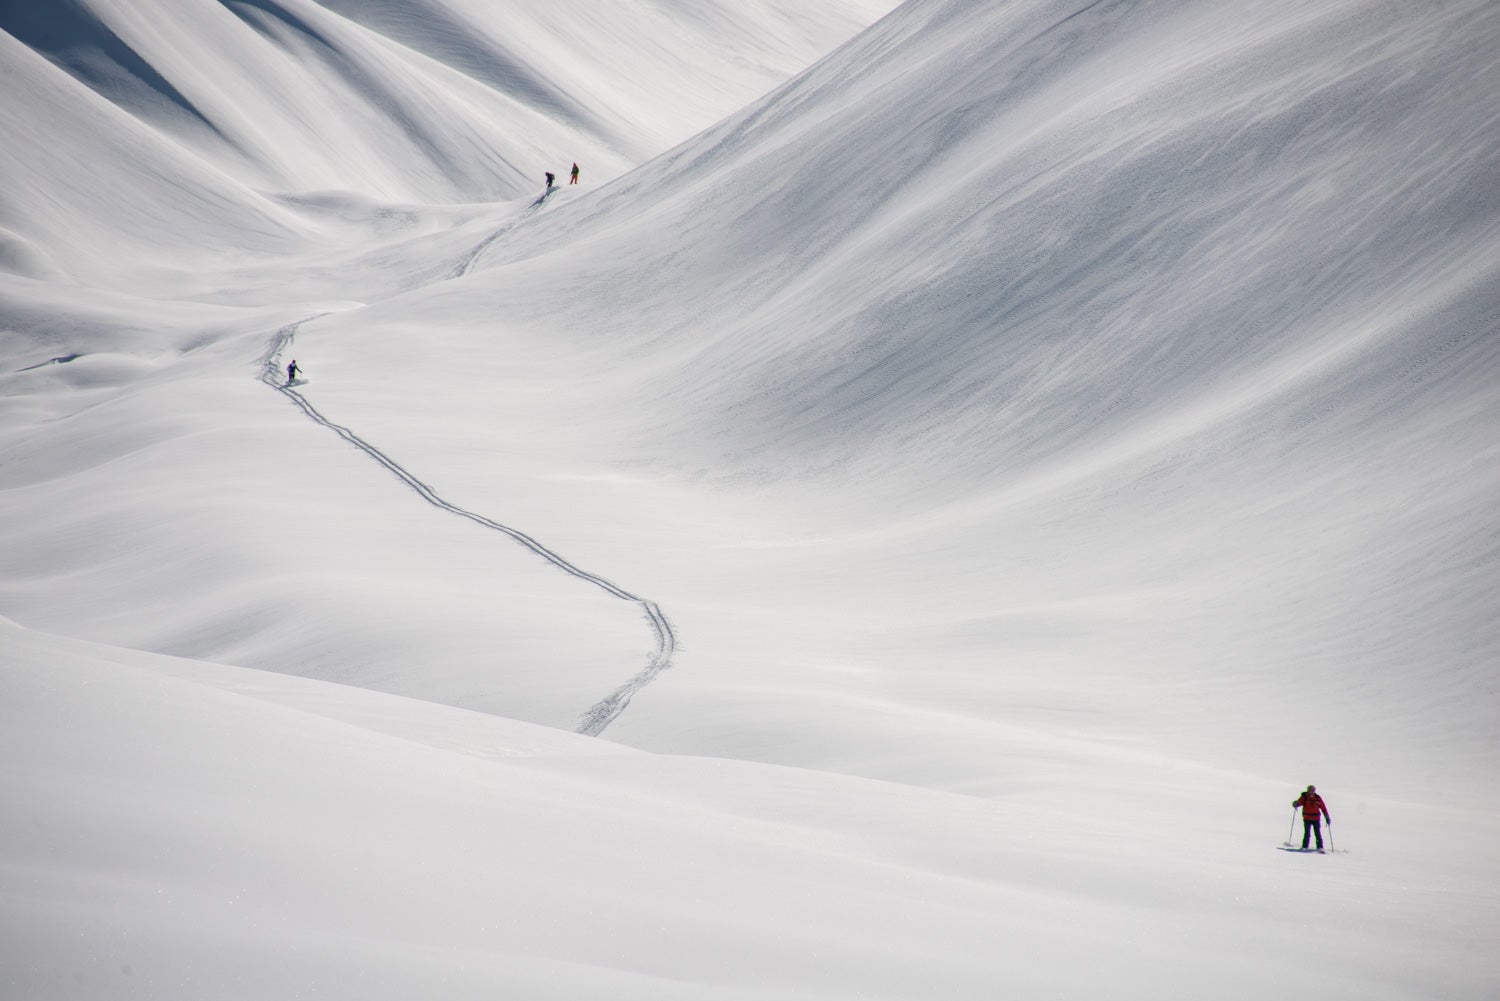 It’s oh so quiet: Heli-skiing on untouched Uzbekistan slopes